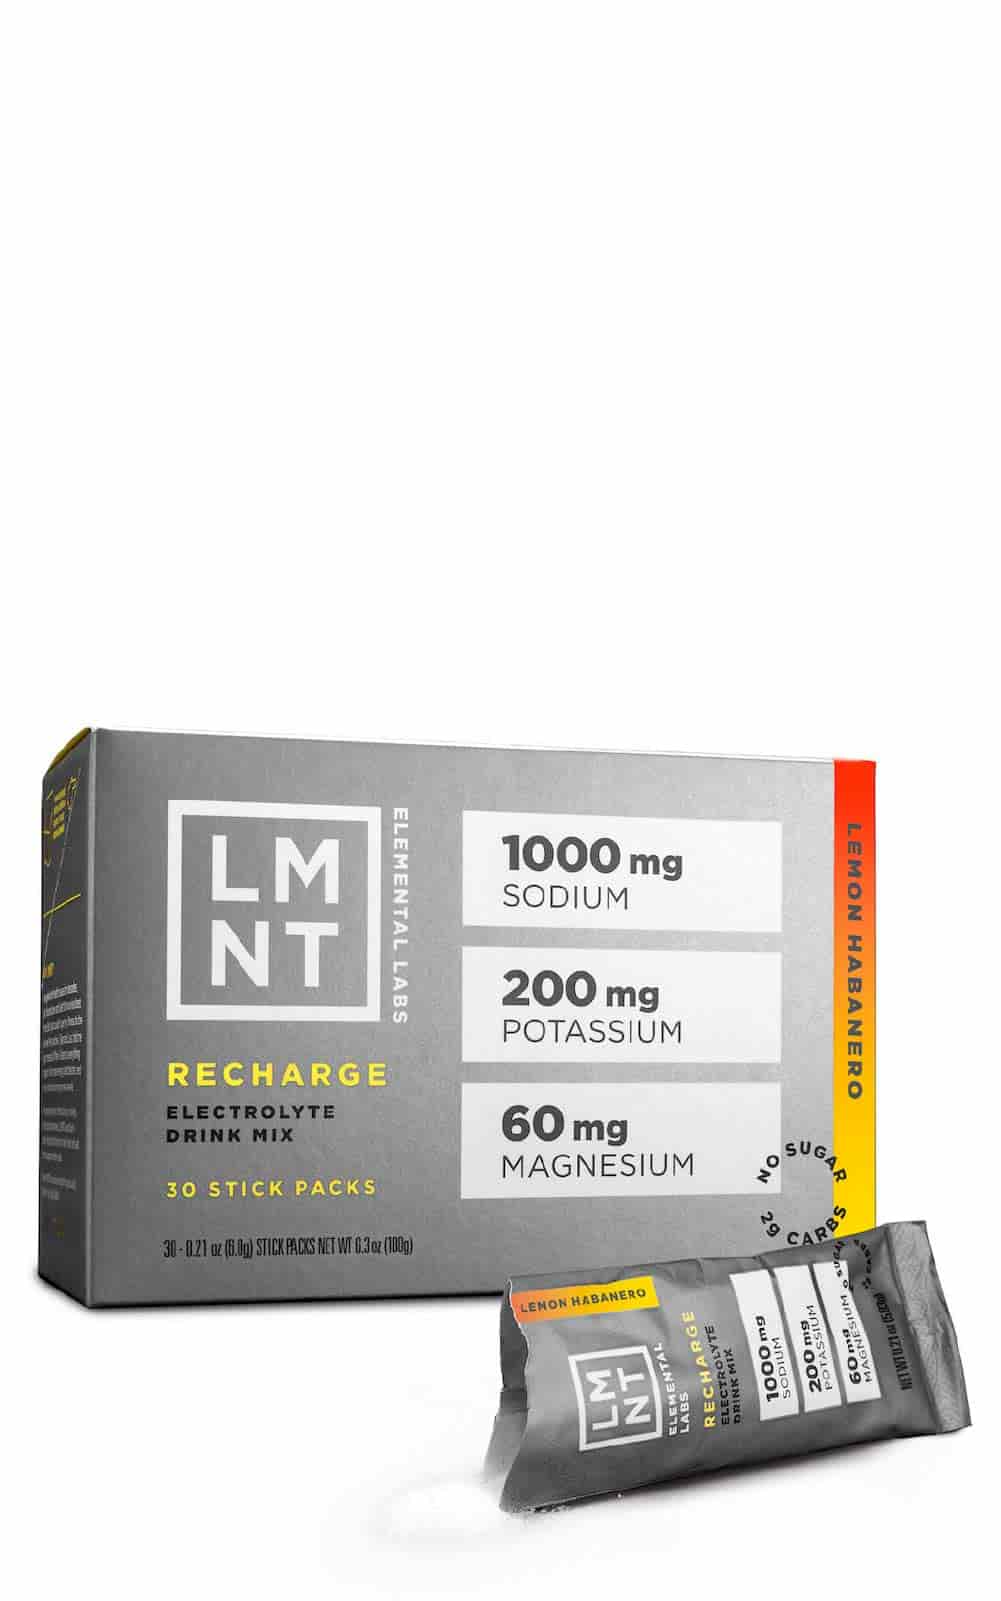 Acheter  LMNT Recharge Electrolyte Drink Mix Lemon Habanero chez LiveHelfi